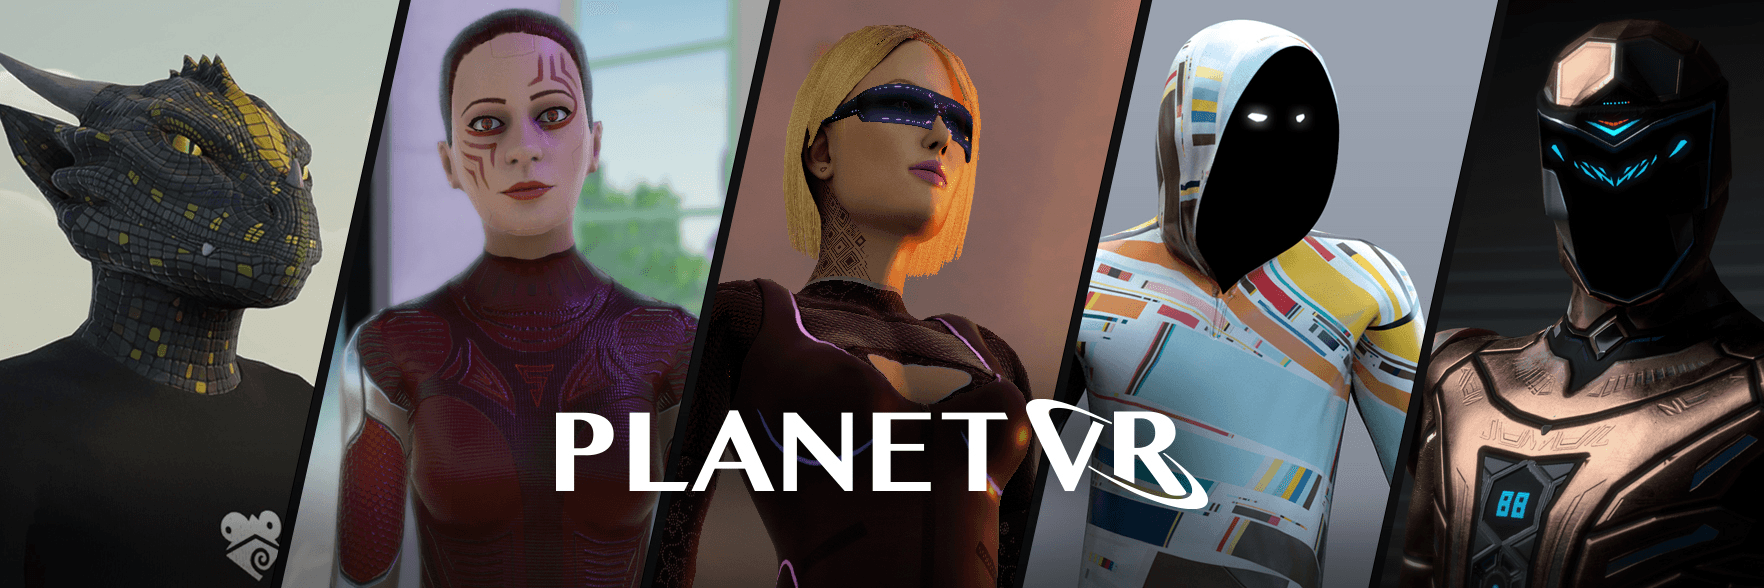 Planet-VR 横幅